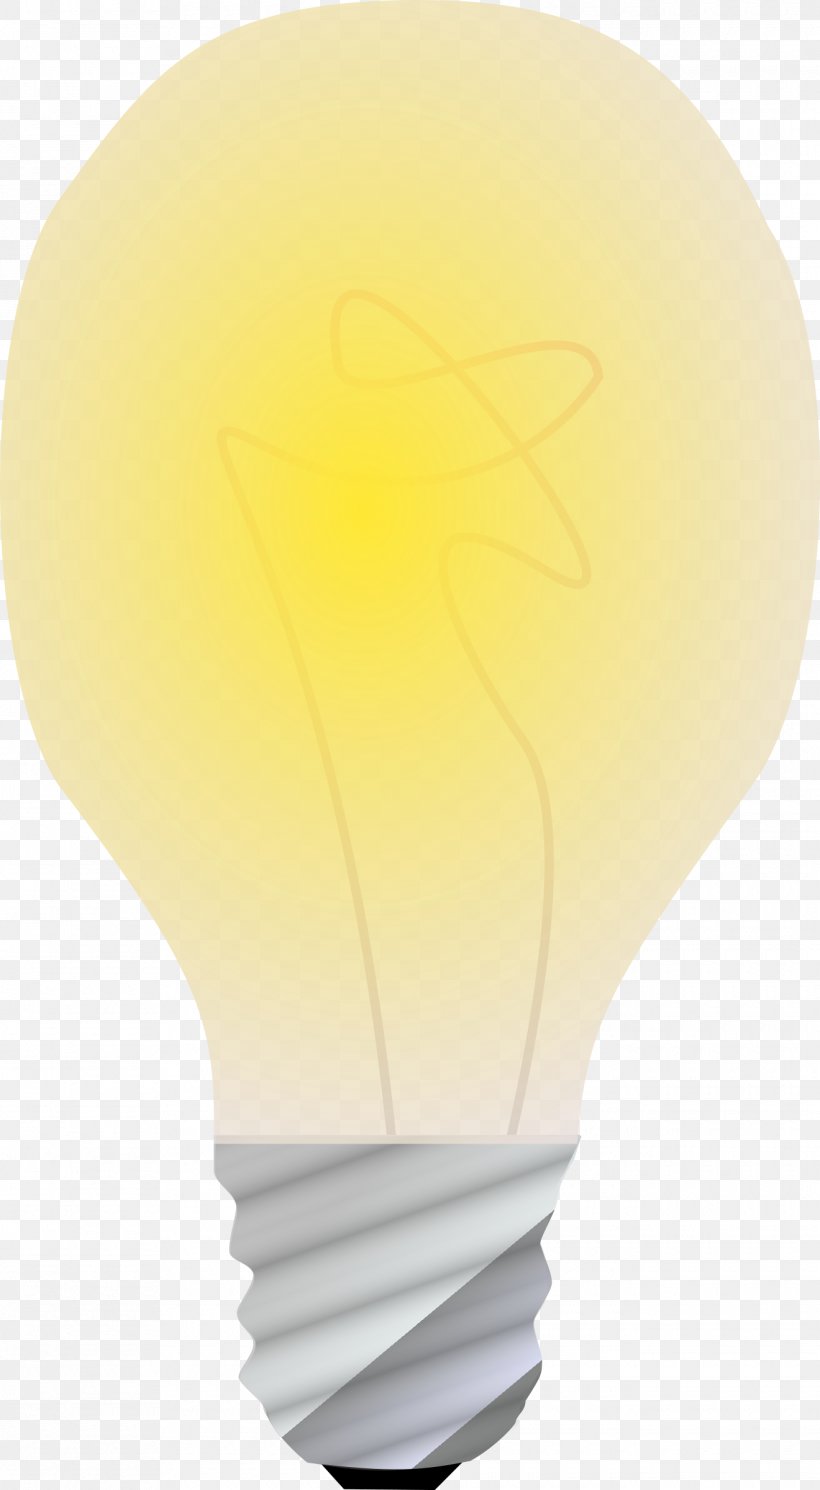 Incandescent Light Bulb Clip Art, PNG, 1320x2400px, Incandescent Light Bulb, Architect, Incandescence, Light, Light Bulb Download Free